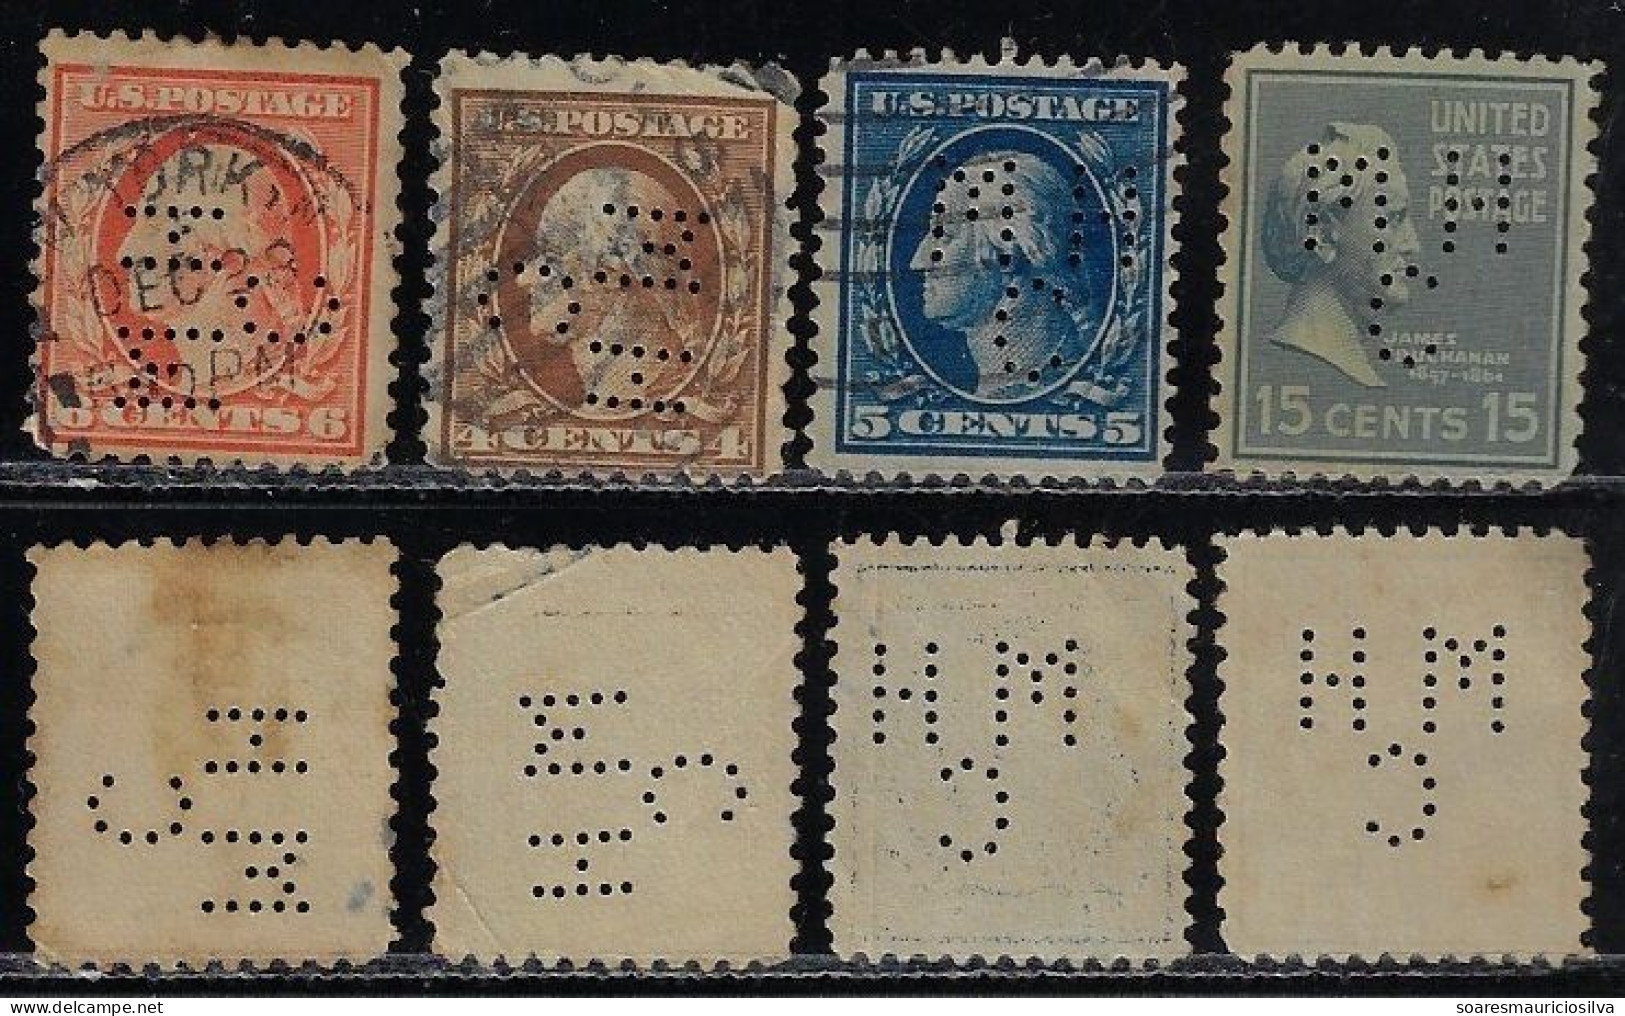 USA United States 1914/1938 4 Stamp Perfin MH/C By Markt & Hammacher Company From New York Lochung Perfore - Zähnungen (Perfins)